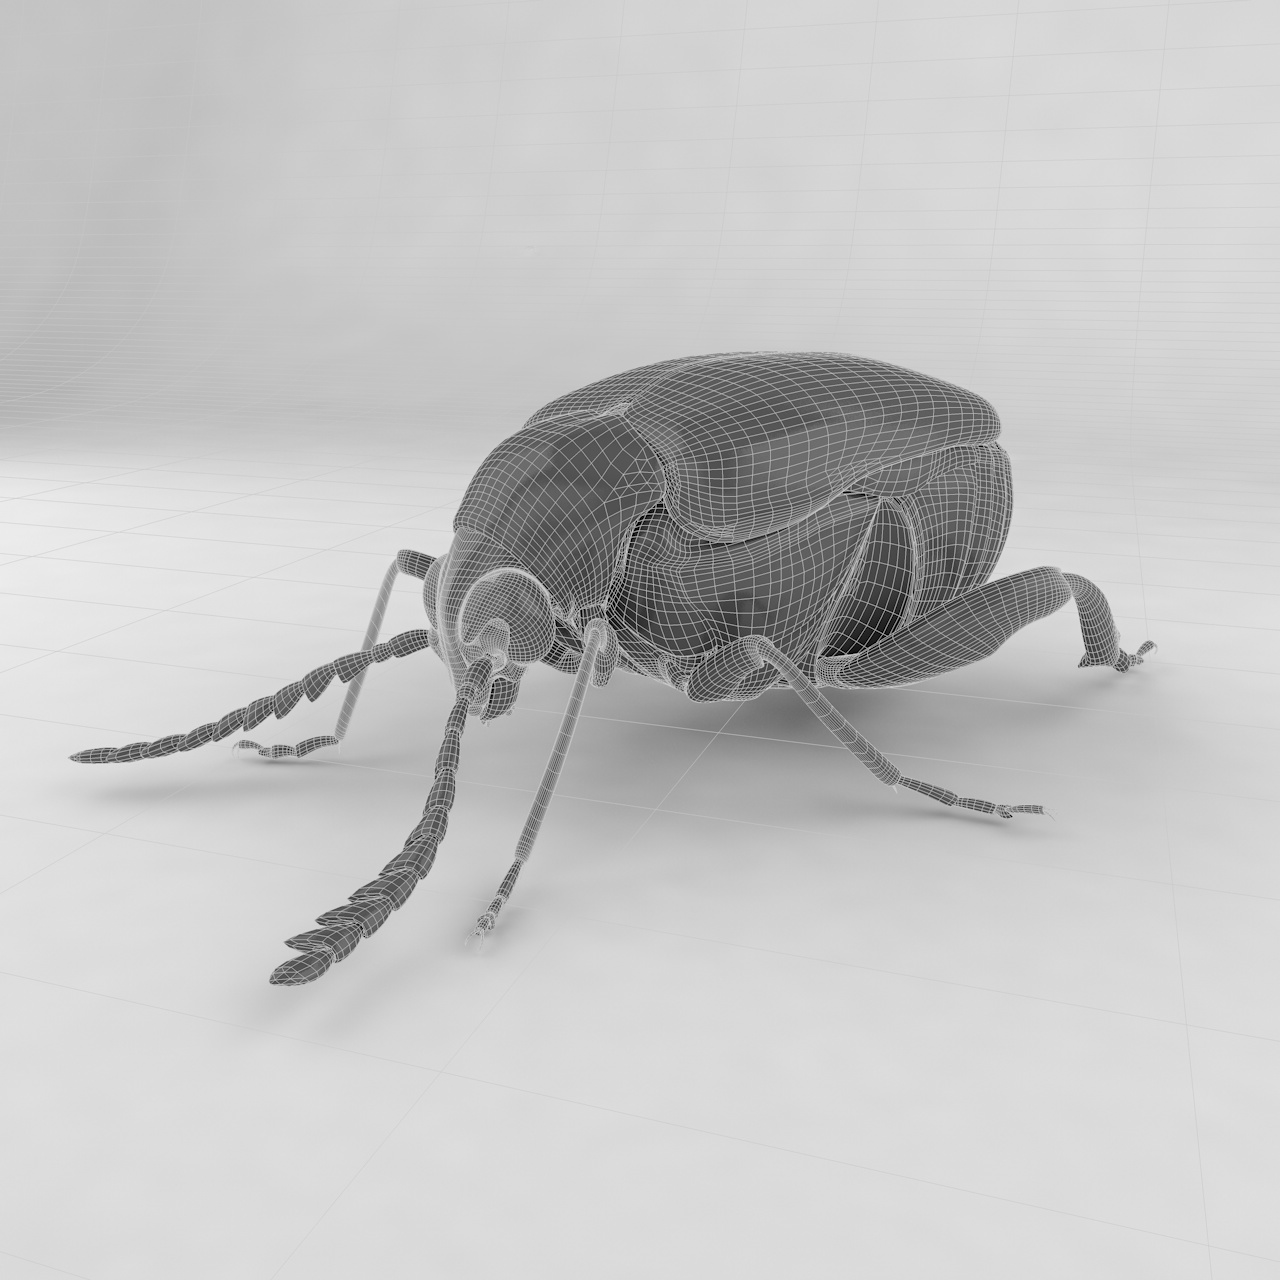 Callosobruchus chinensis böcek böcekleri 3d modeli